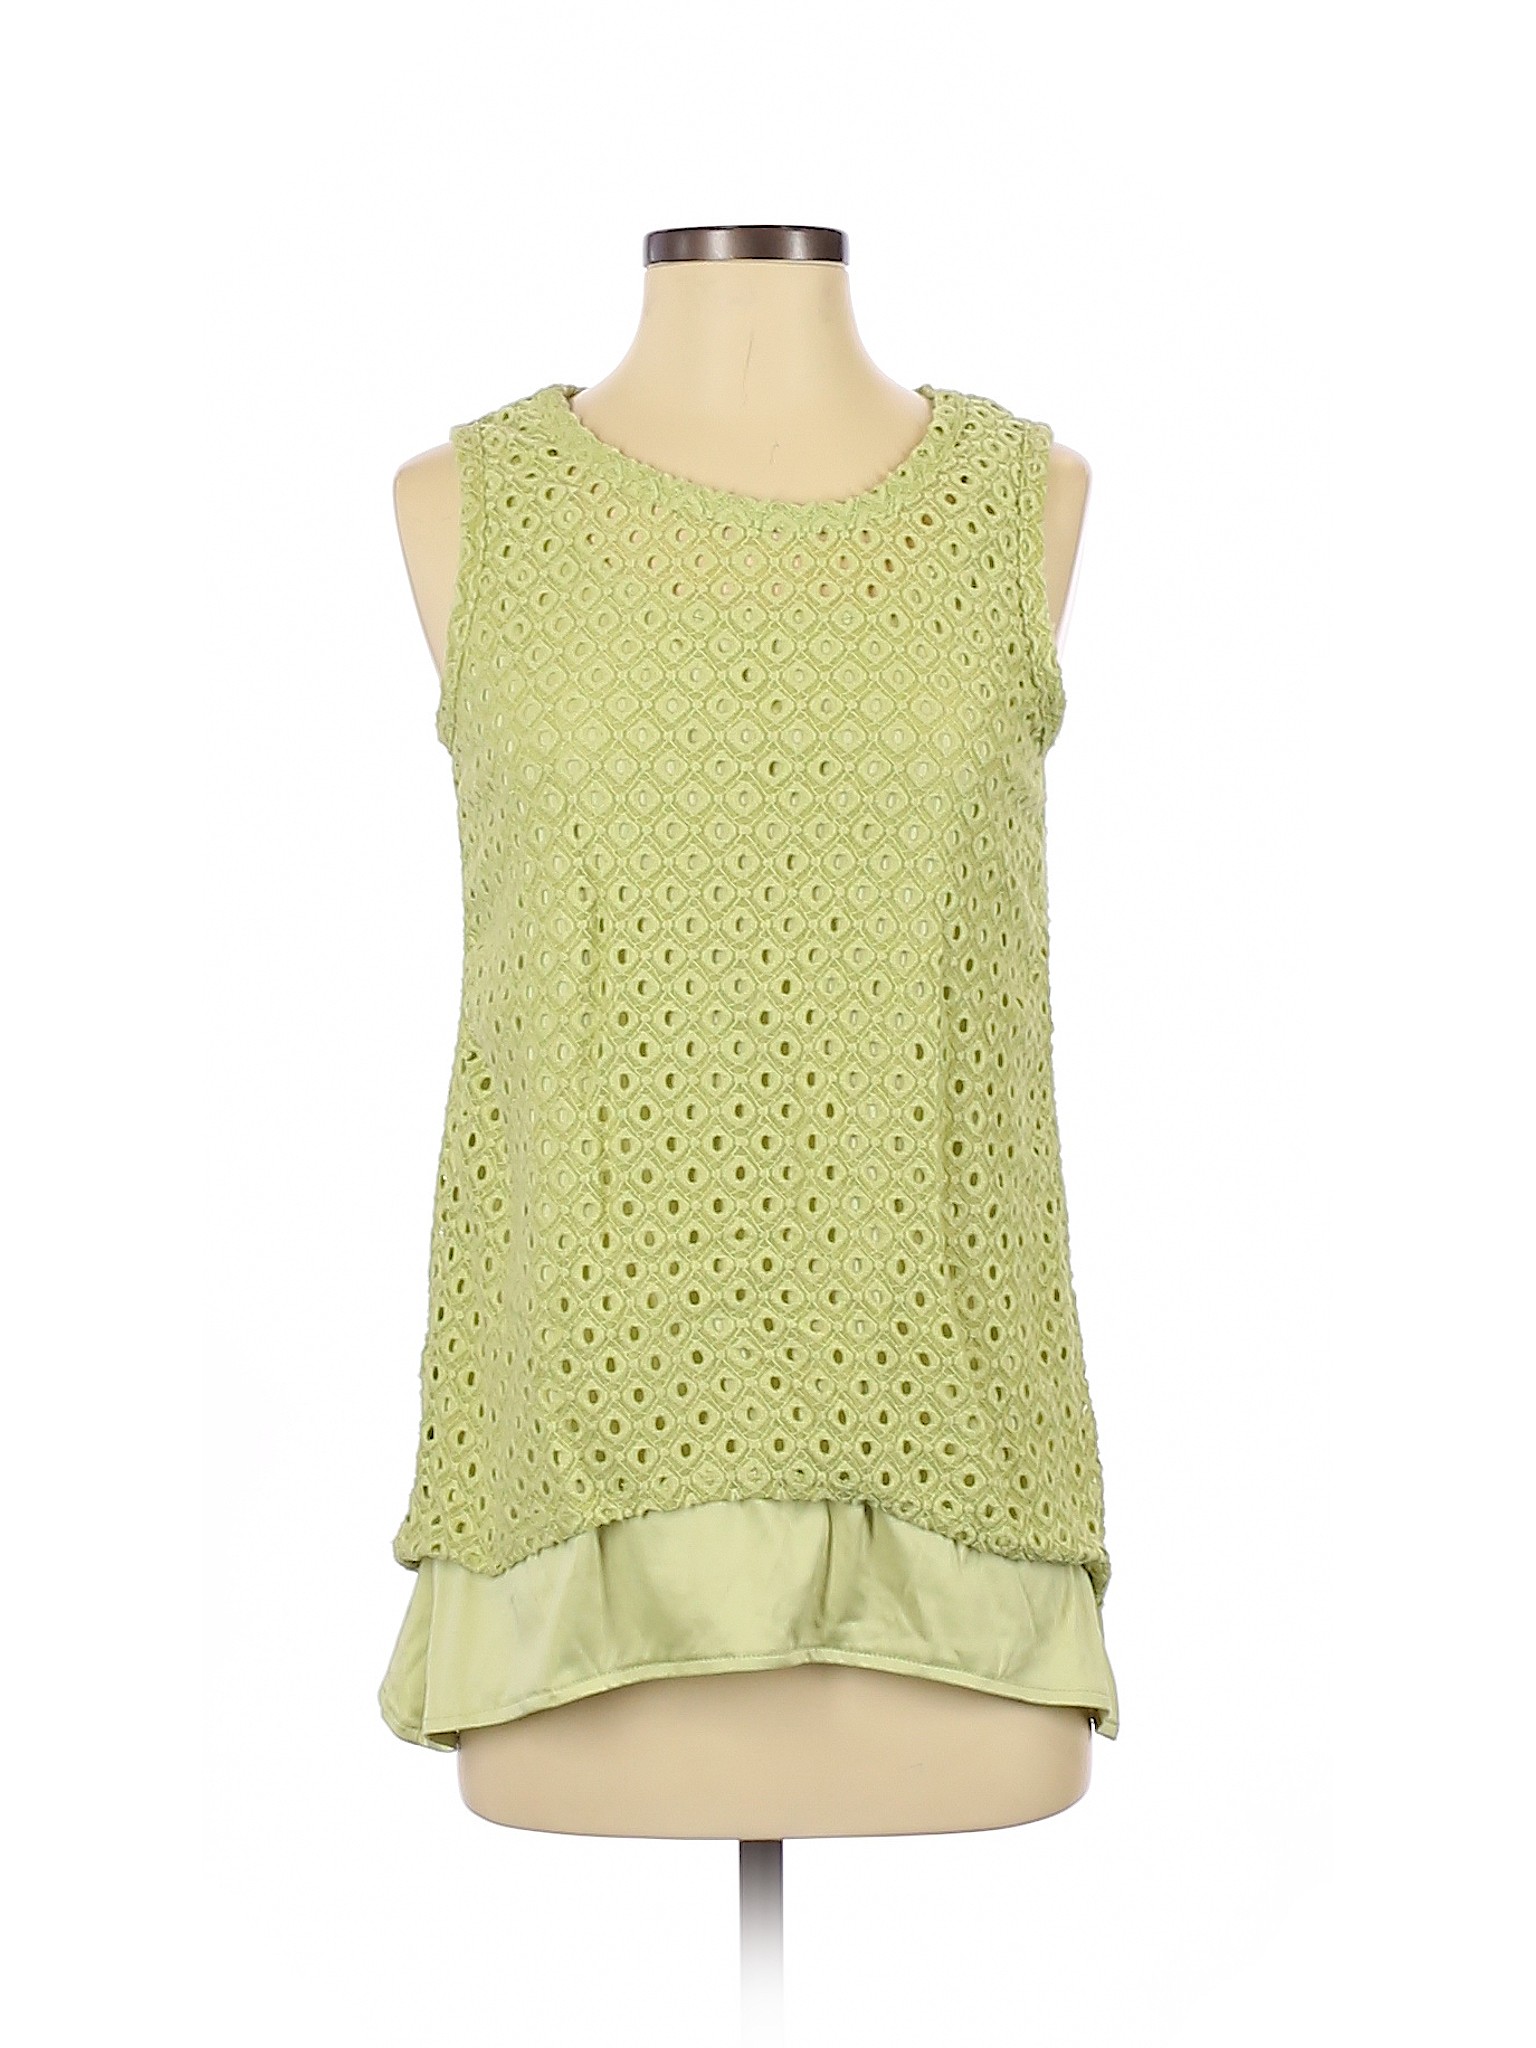 Simply Vera Vera Wang Women Green Sleeveless Blouse S | eBay